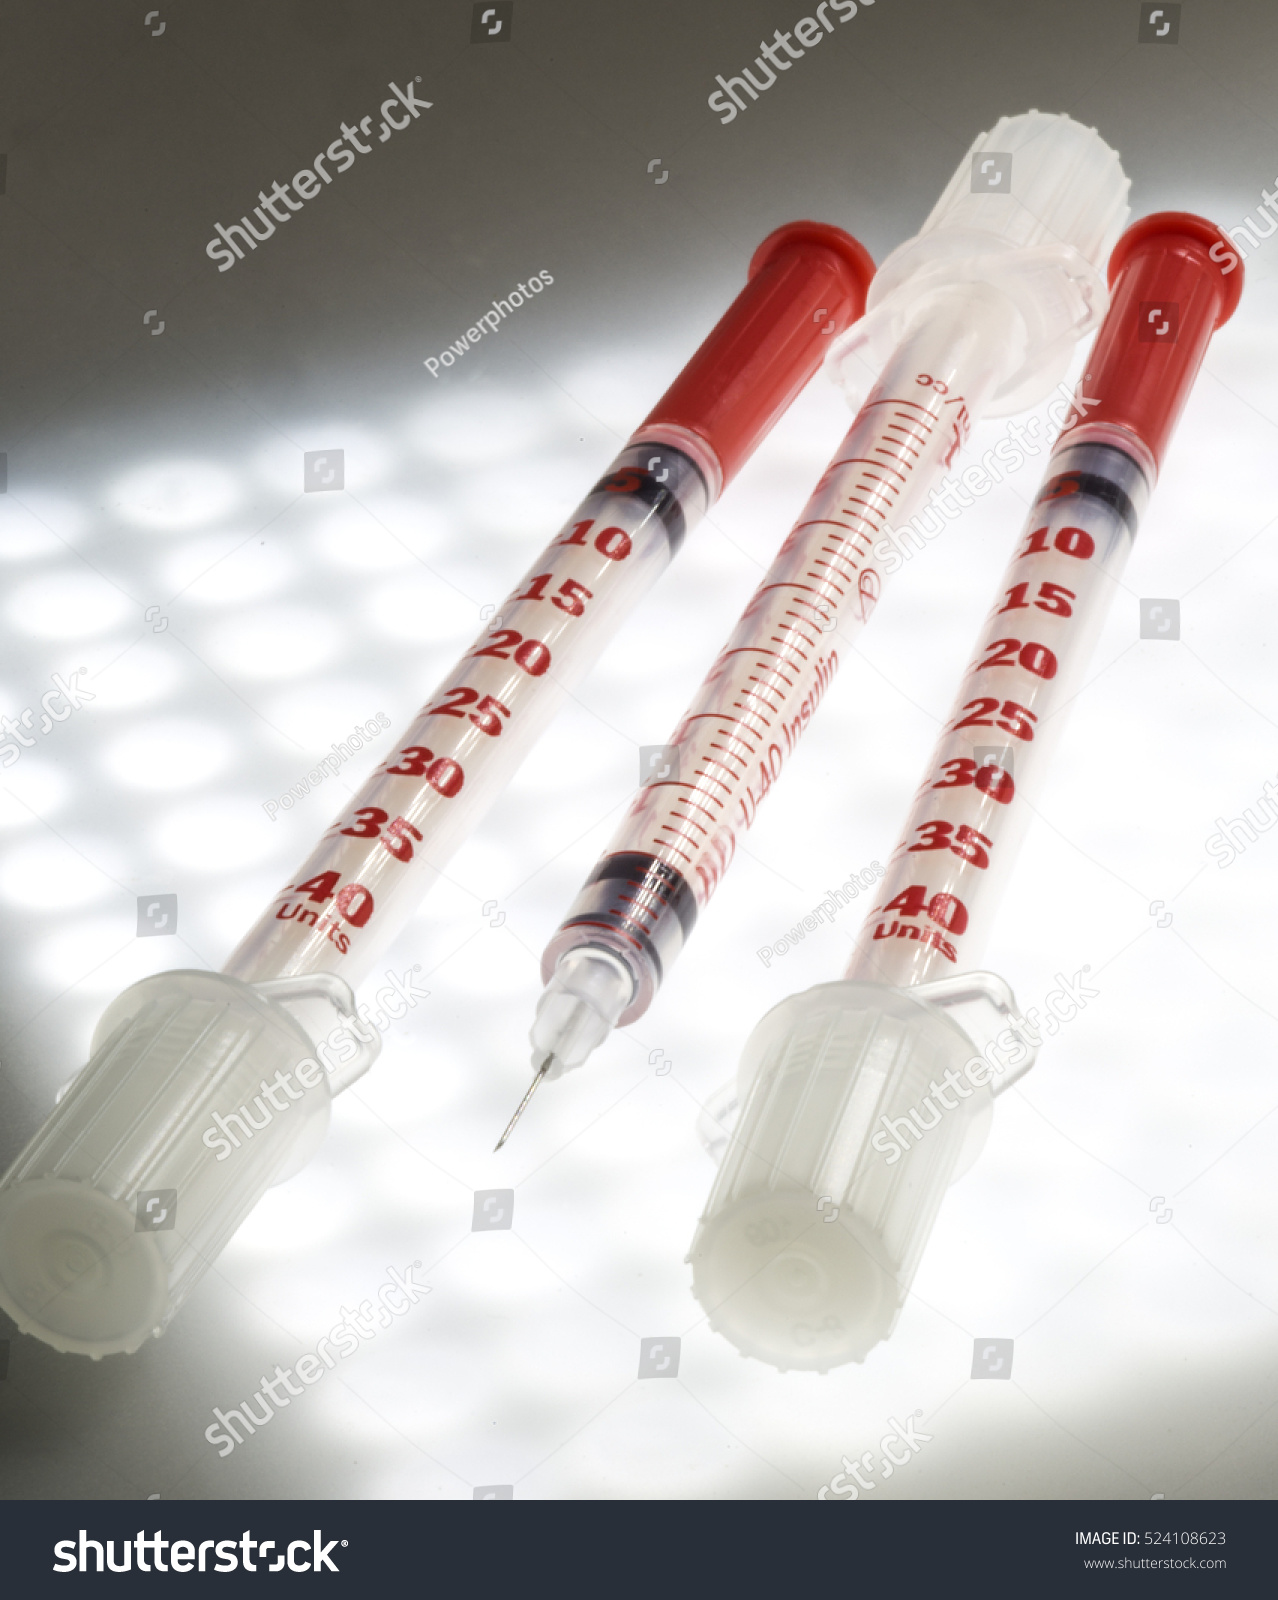 u40 insulin syringes